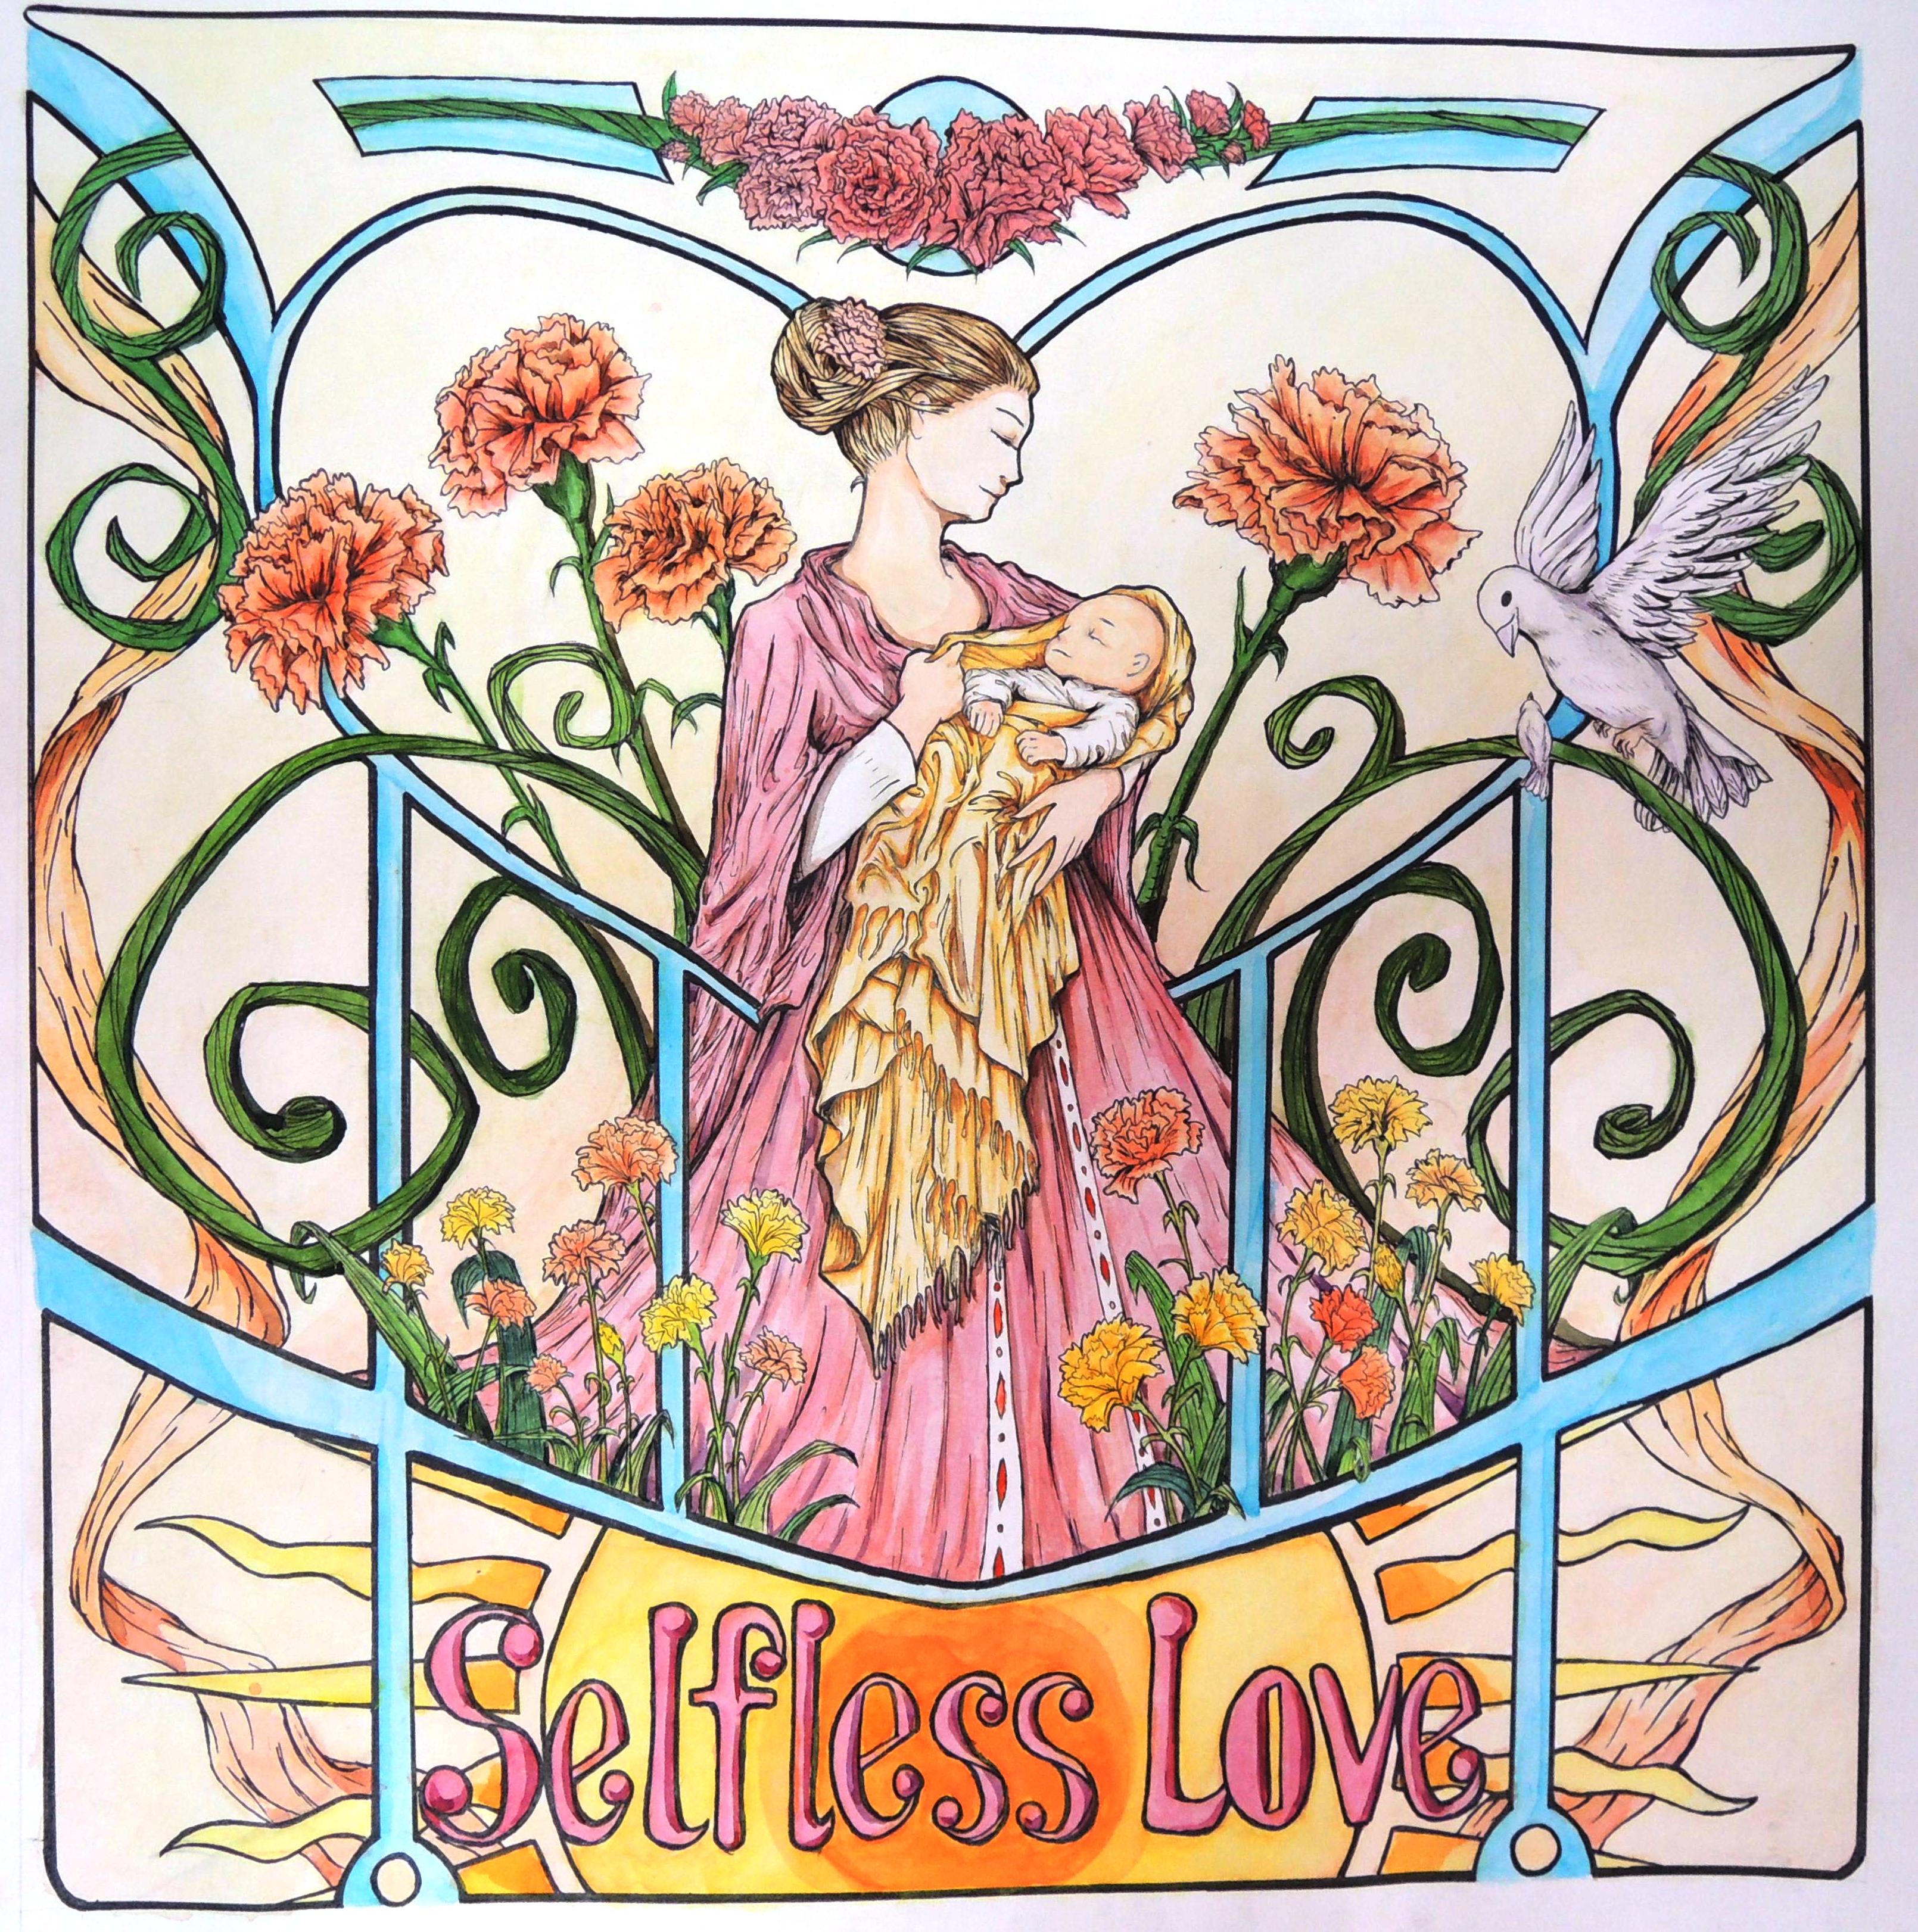 Selfless Love